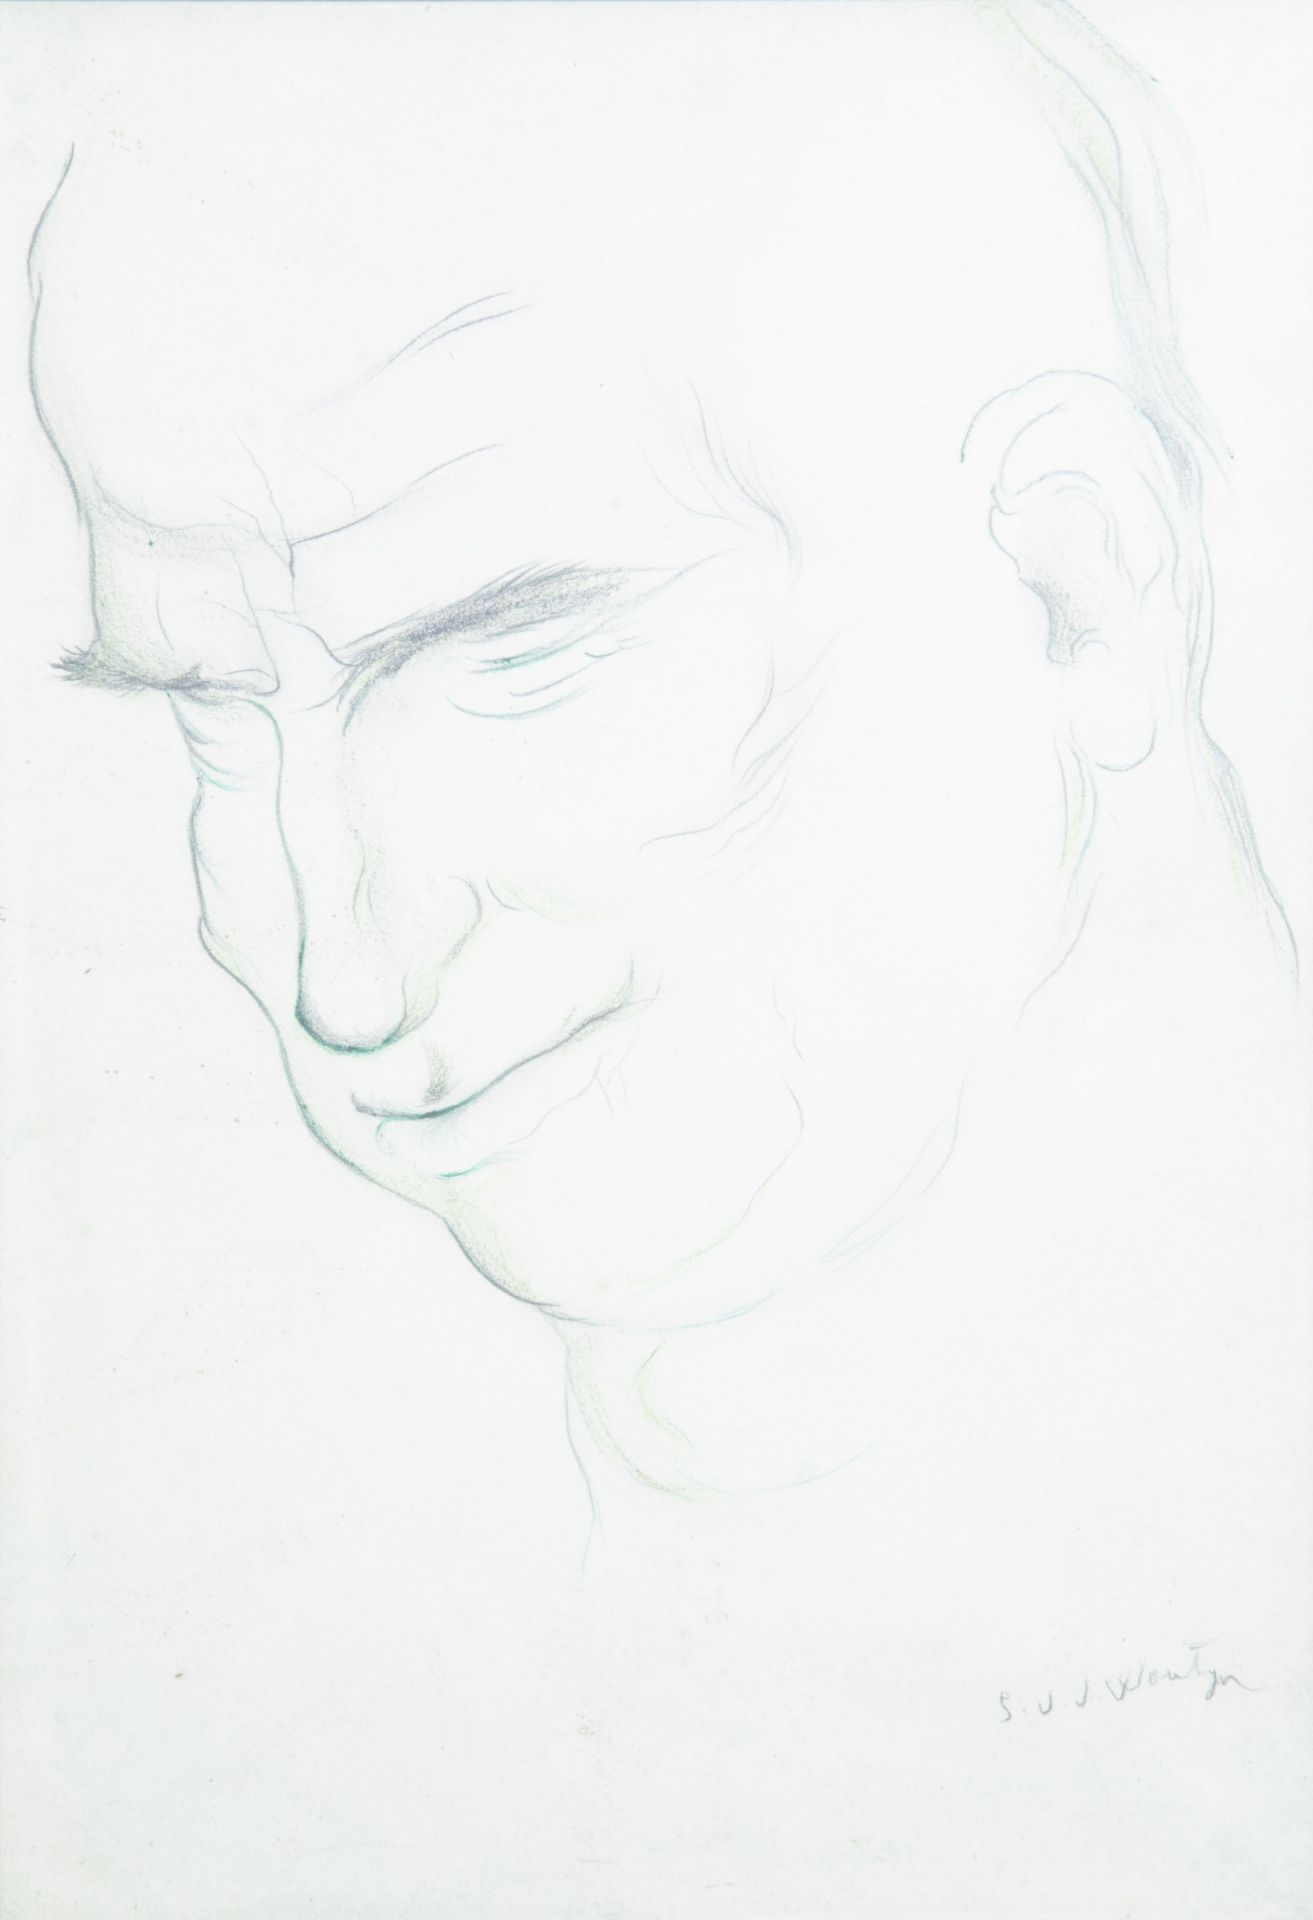 Gustave Van de Woestyne (1881-1947): Head of a man, pencil on paper